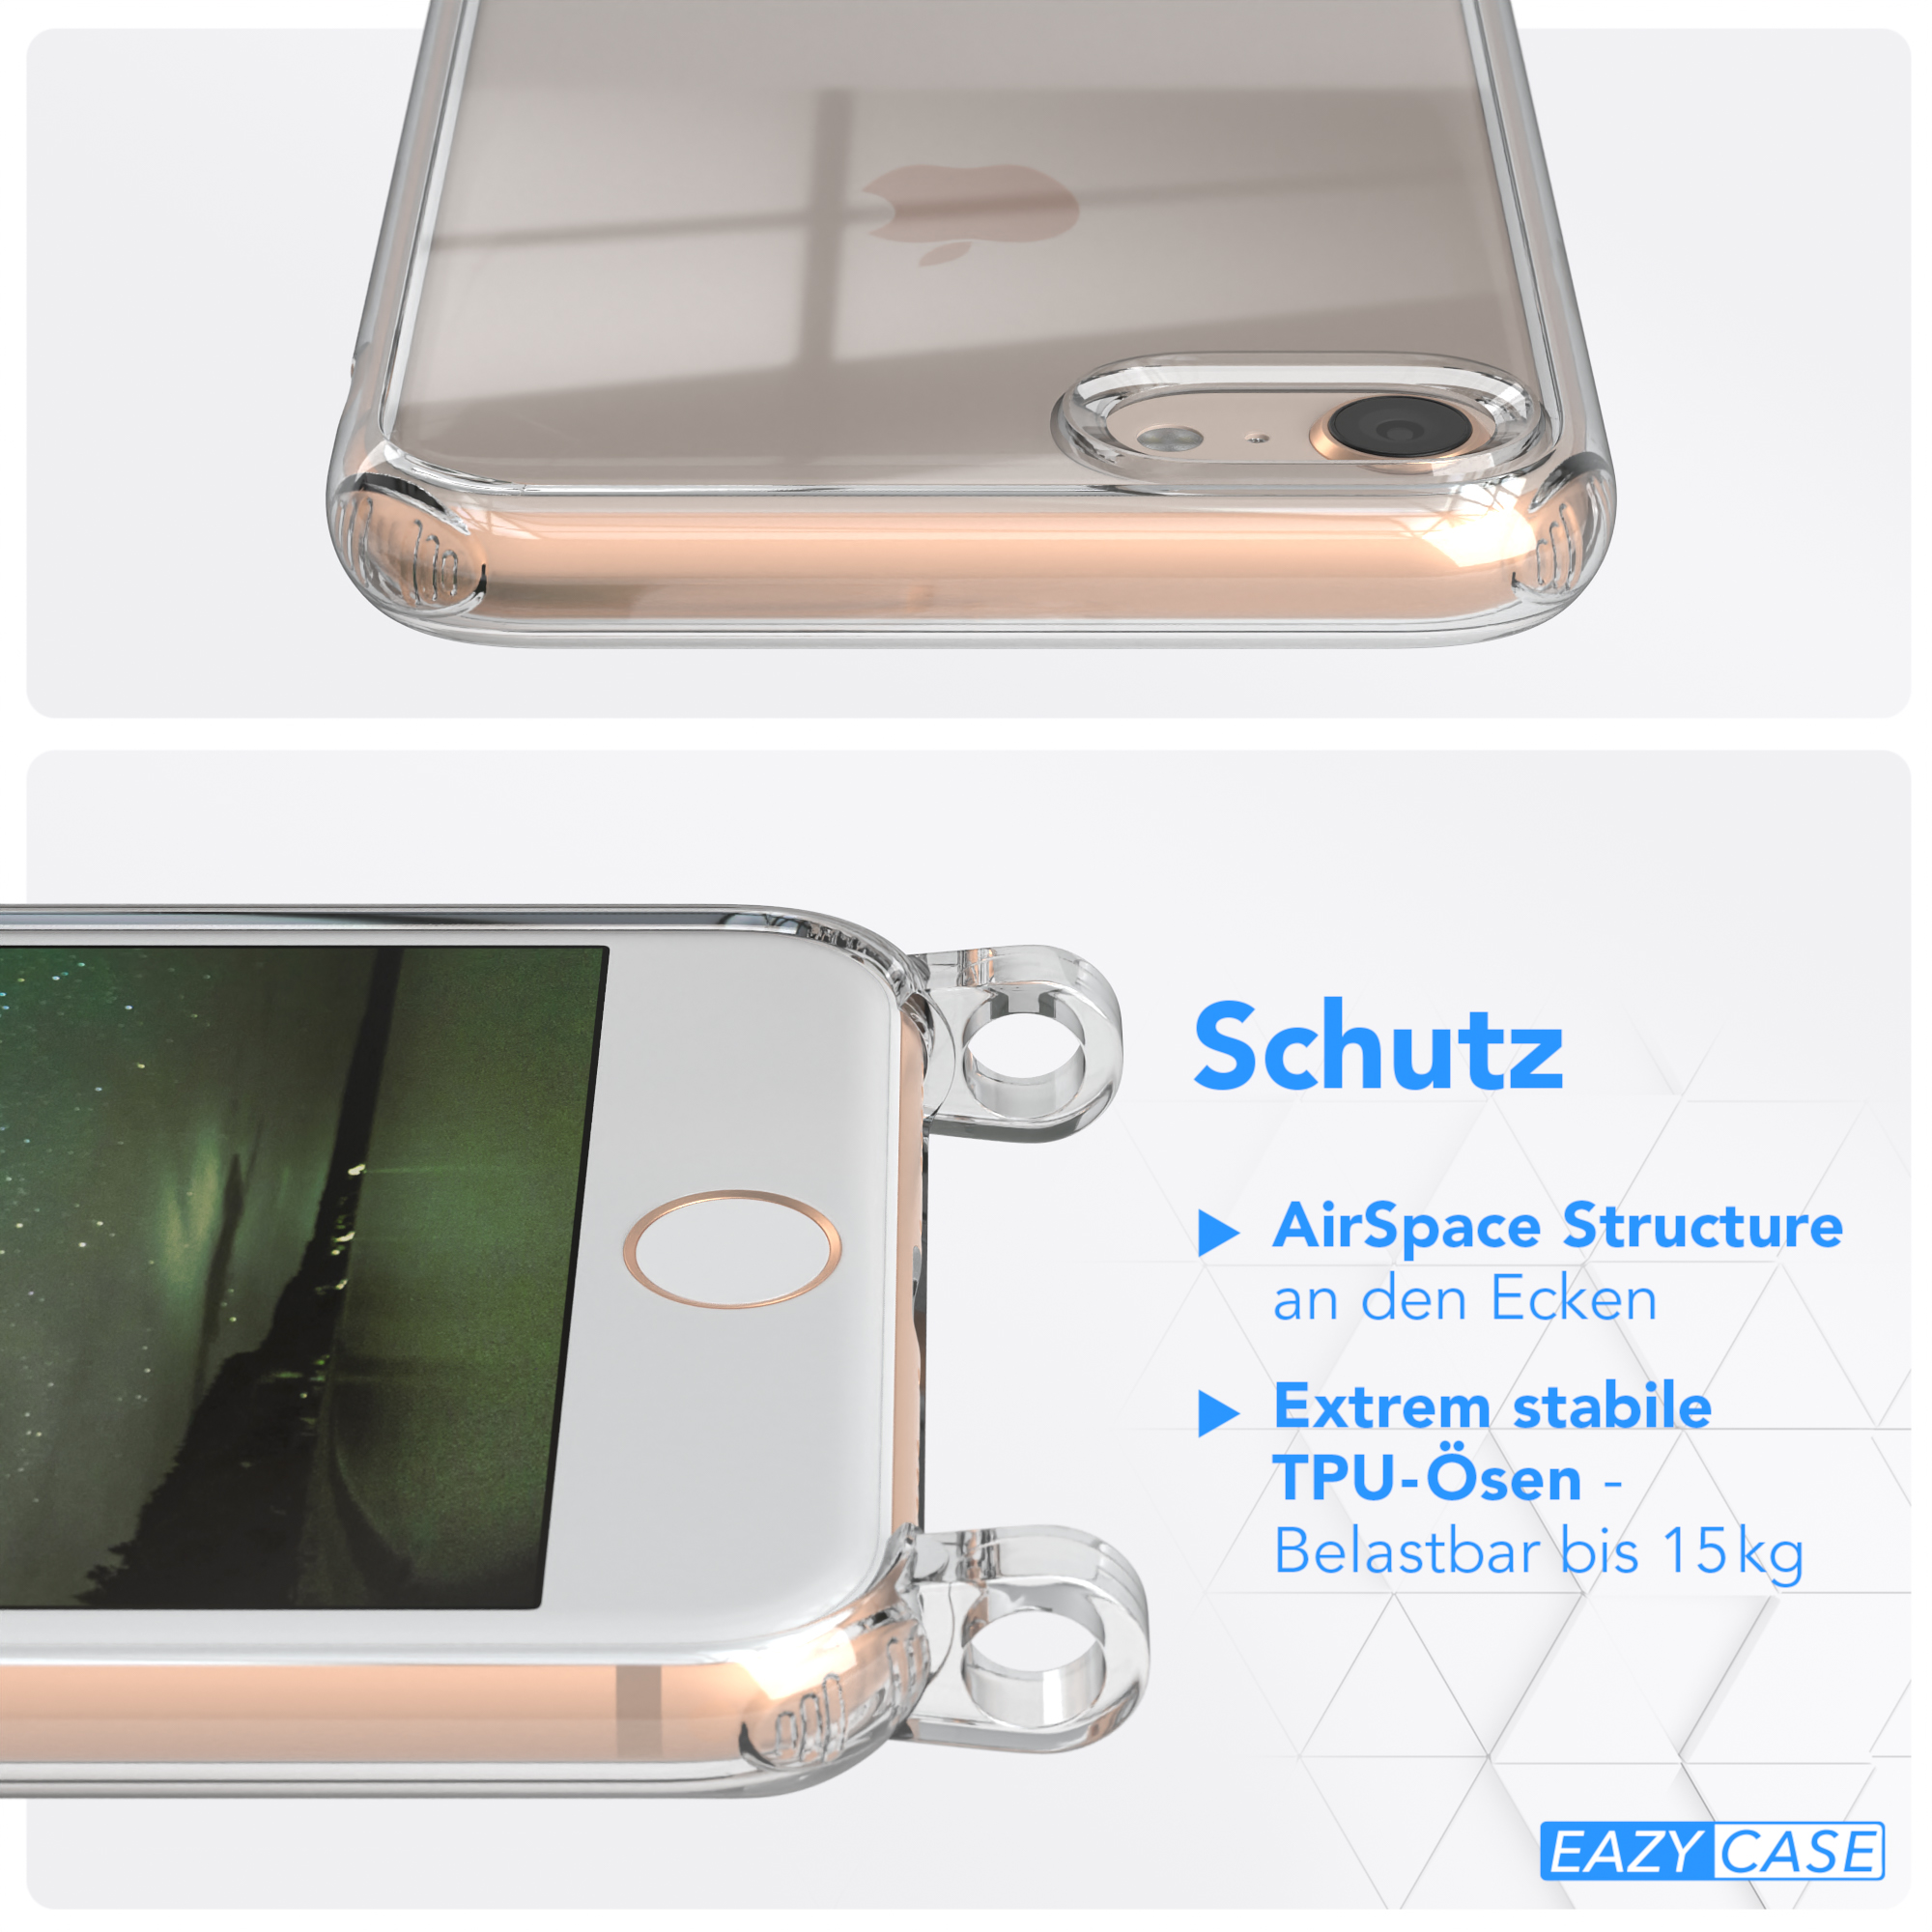 EAZY CASE Transparente SE iPhone 7 Handyhülle breiter Karabiner, Dunkel Kordel 8, / Umhängetasche, iPhone Apple, mit 2020, + Gold 2022 / Grün / SE